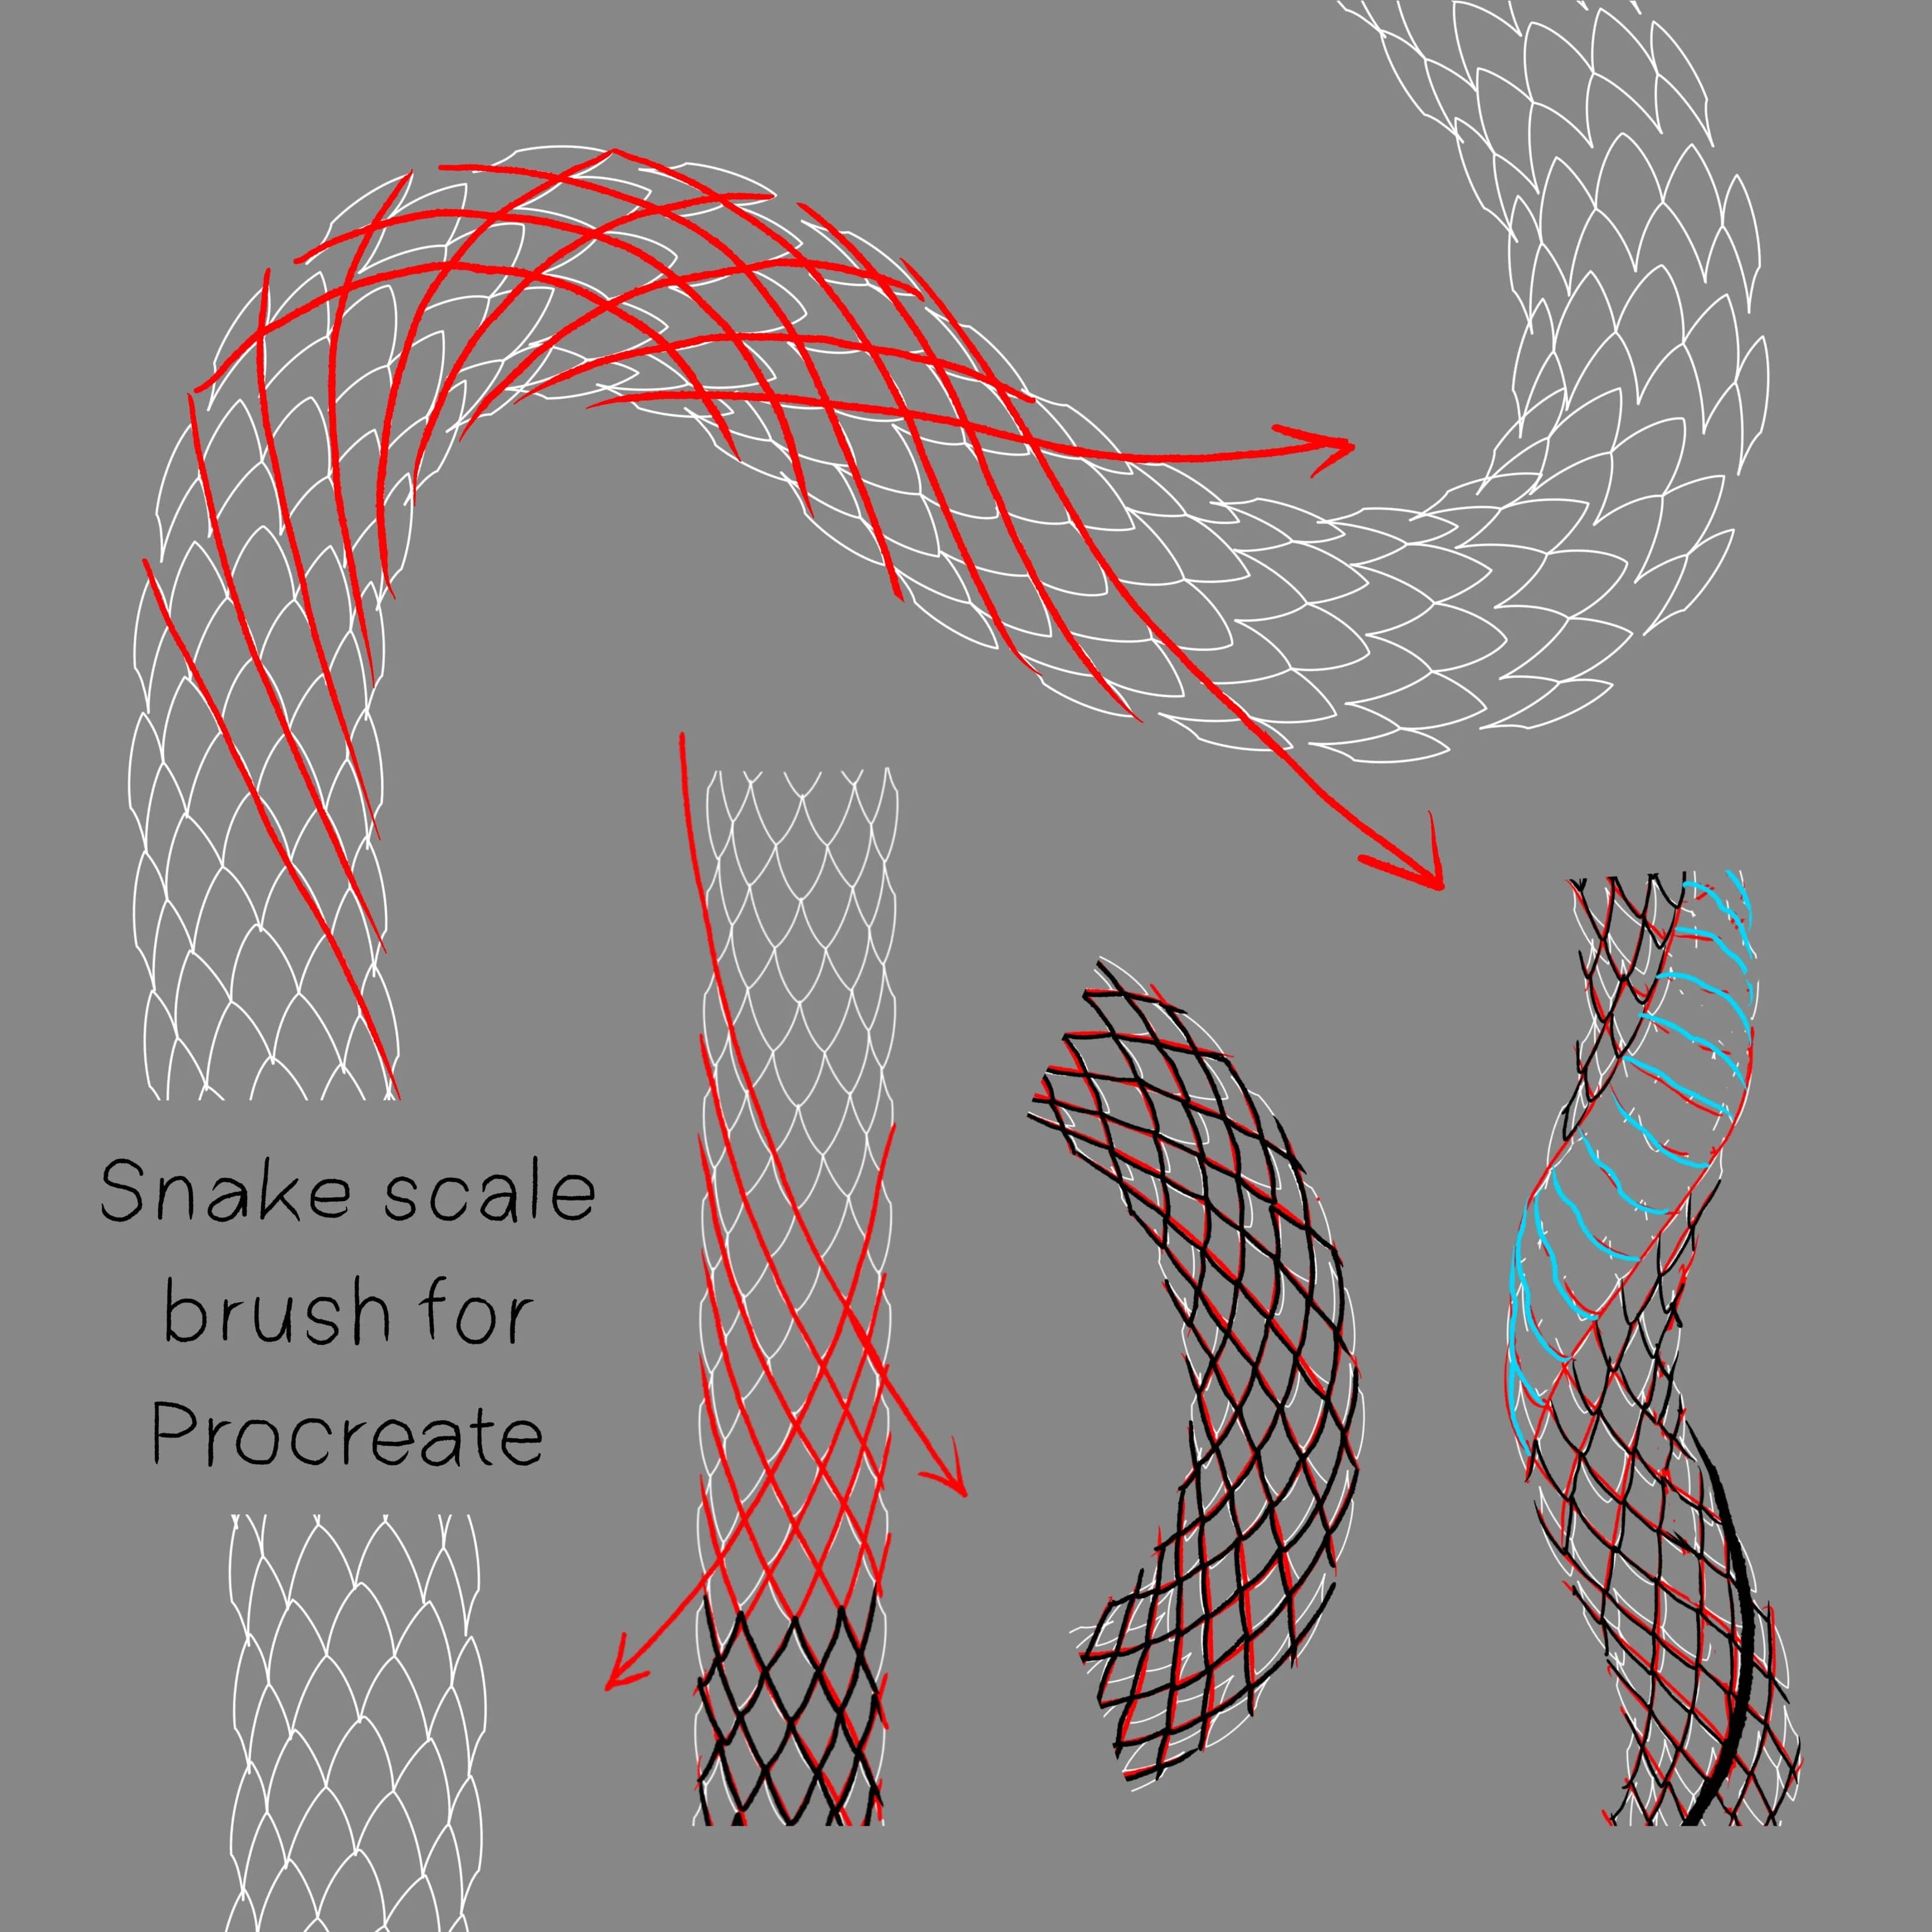 Snake scale brush for Procreate